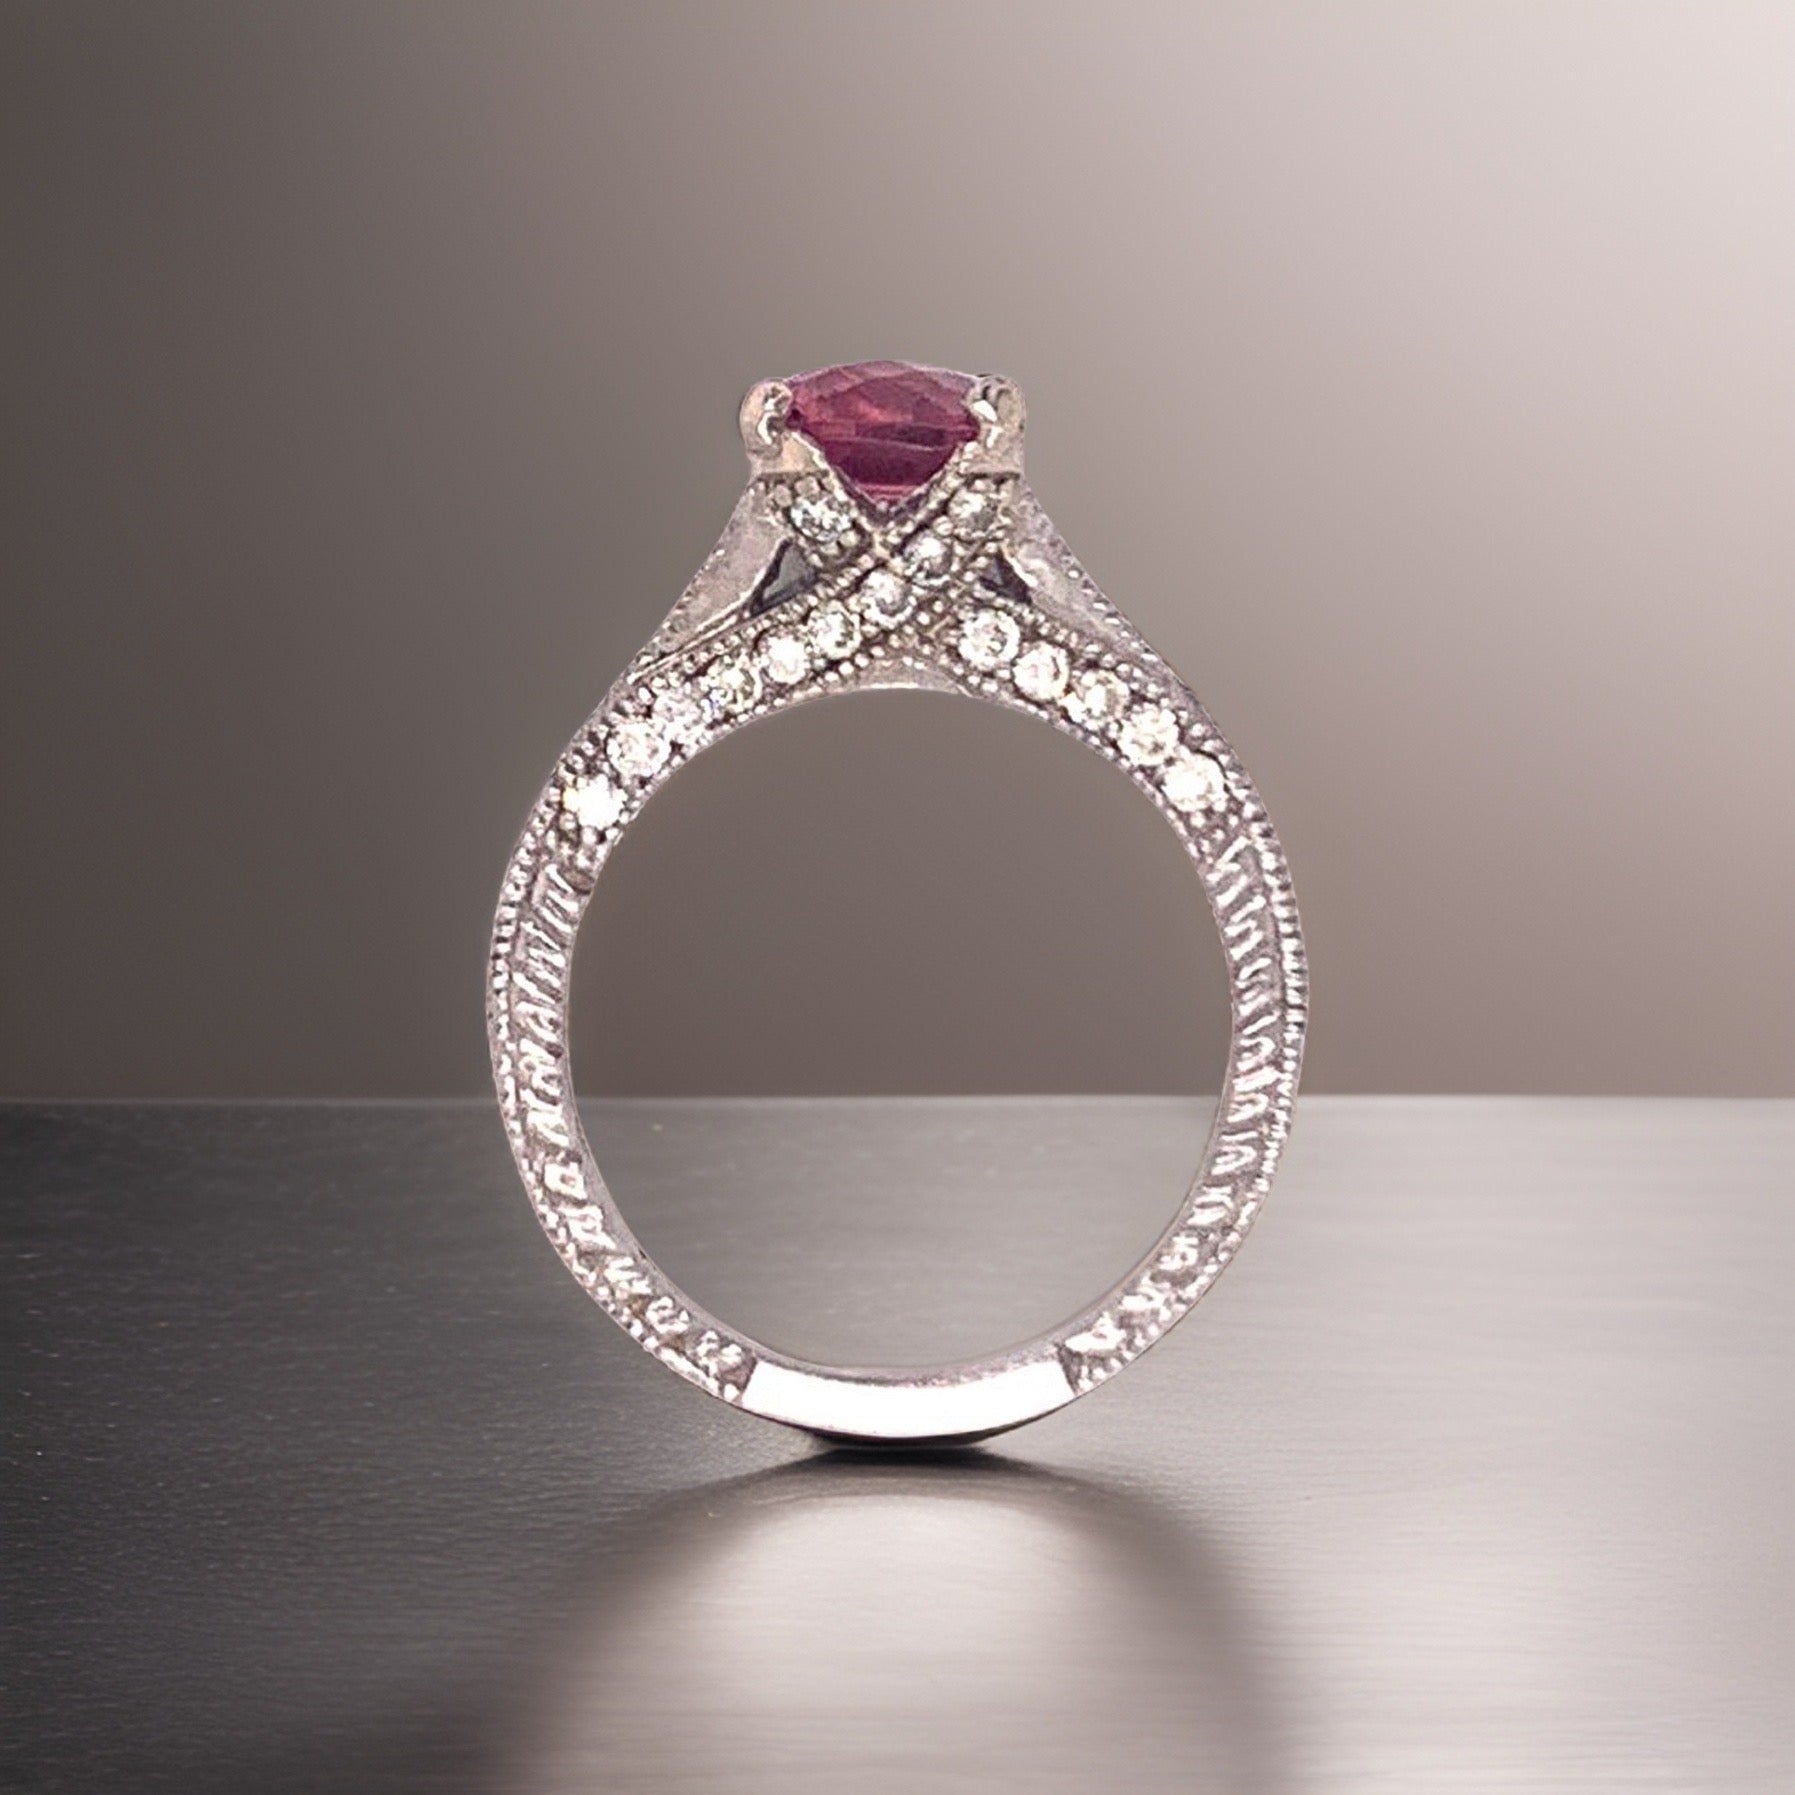 Diamond Pink Tourmaline Rubellite Ring 6.5 14k Gold 2.45 Tcw Certified $3,700 912289 - Certified Fine Jewelry